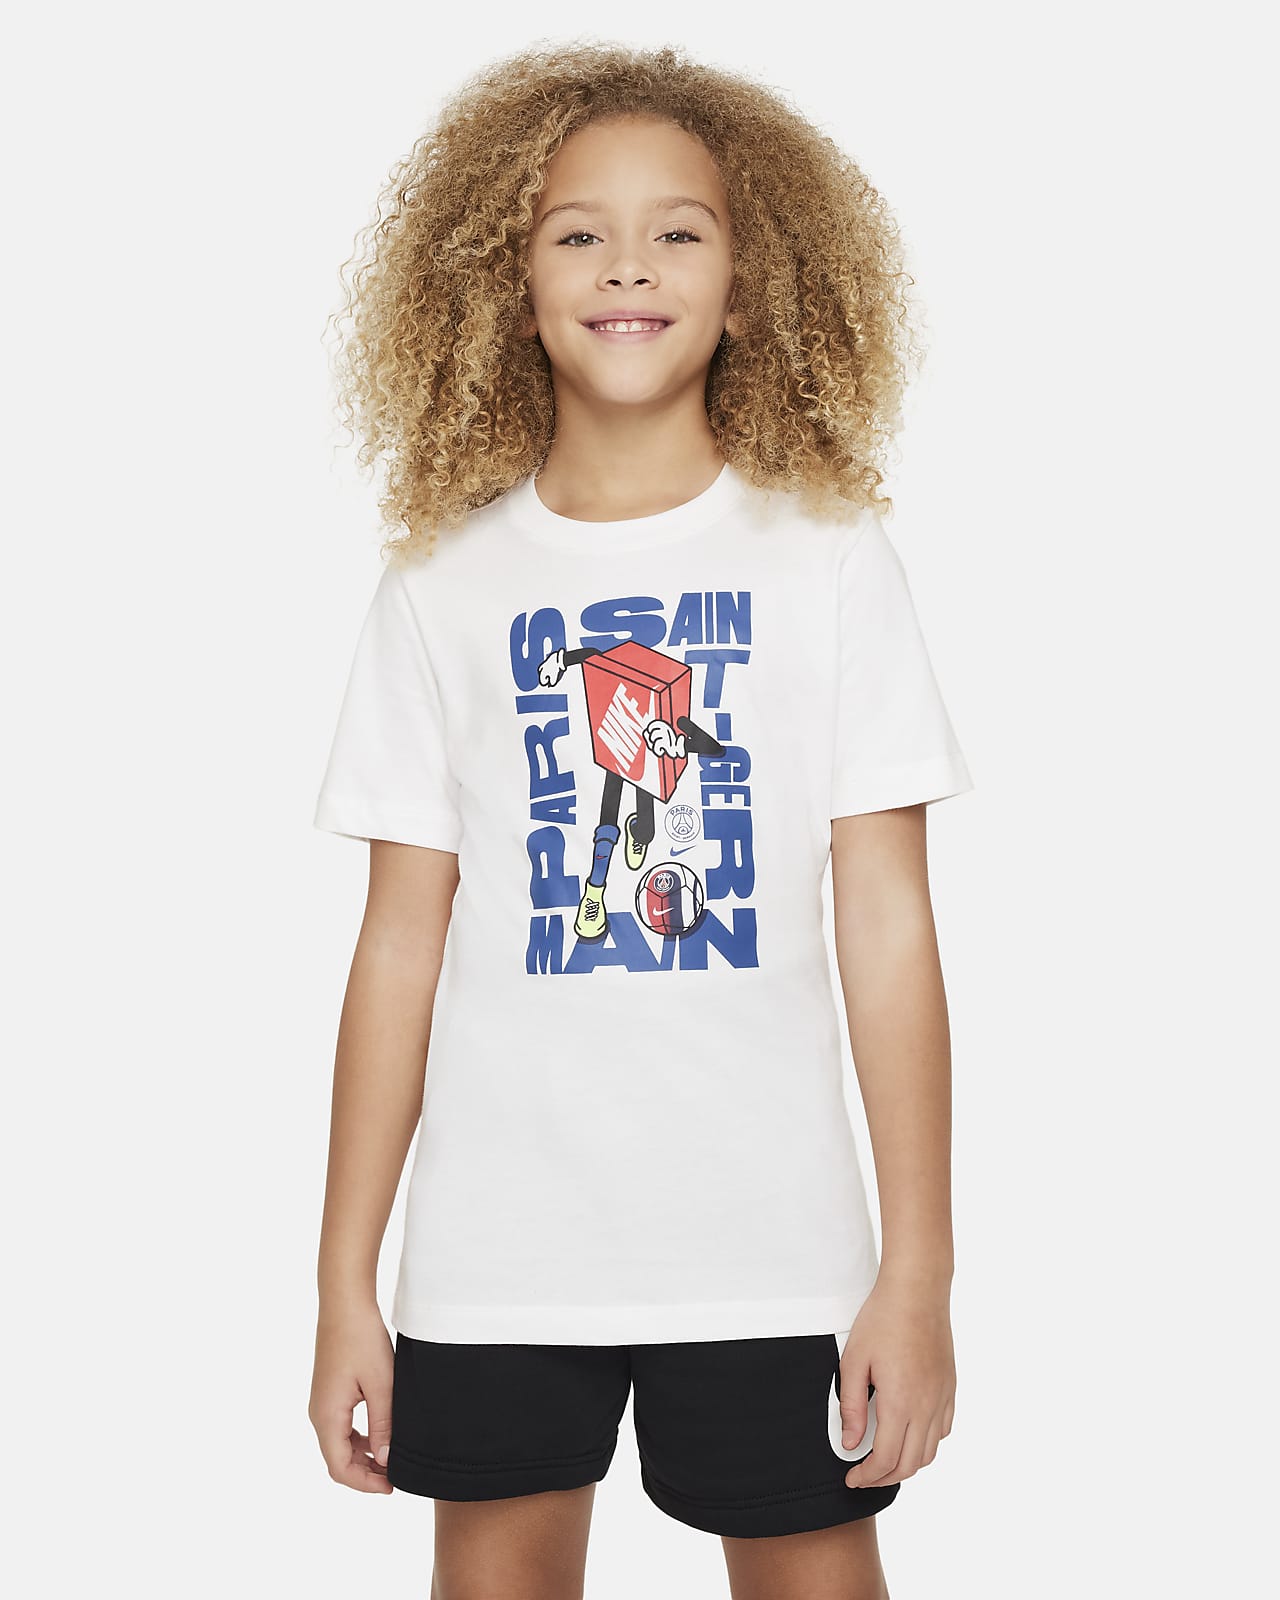 Paris Saint-Germain-T-shirt med Nike Football til større børn